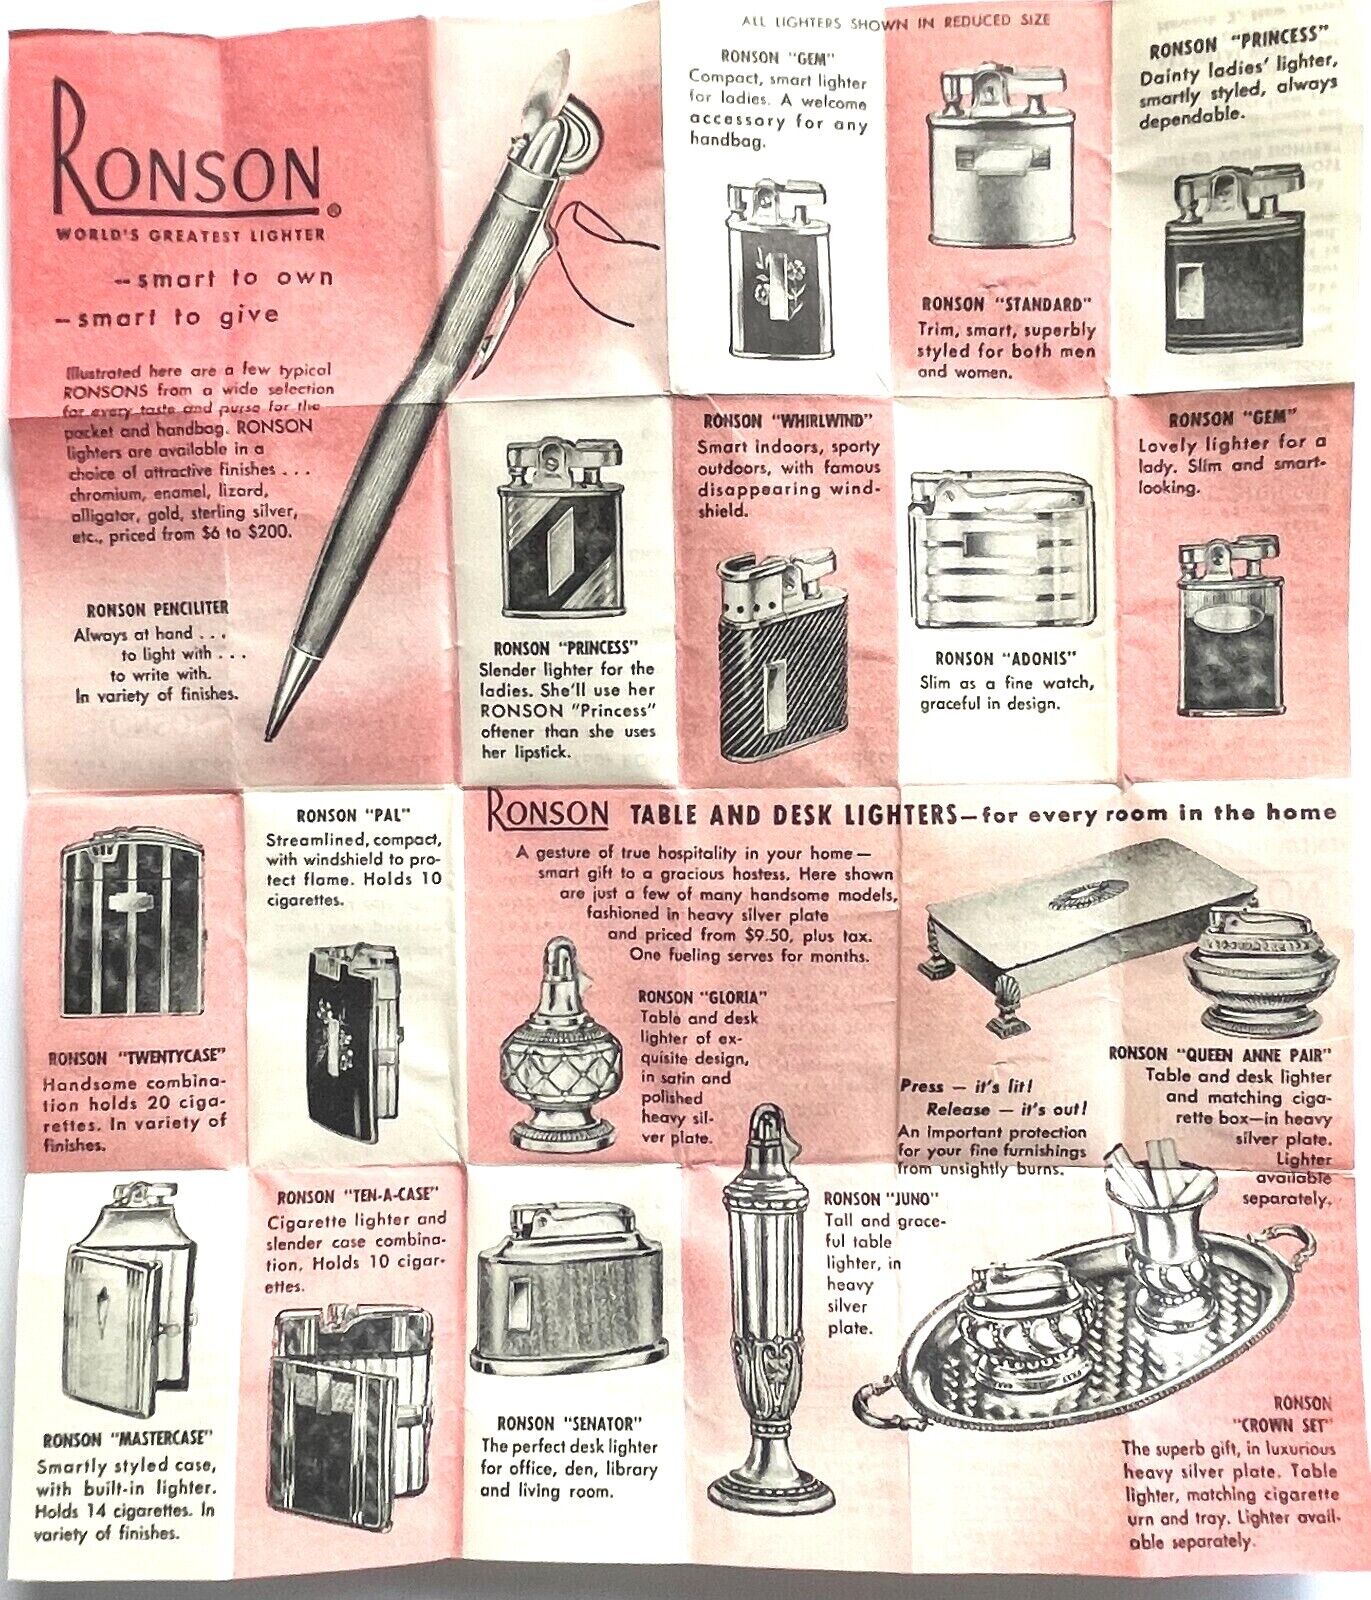 ORIGINAL VINTAGE 1950s RONSON WHIRLWIND LIGHTER INSTRUCTIONS AND LIGHTER CATALOG